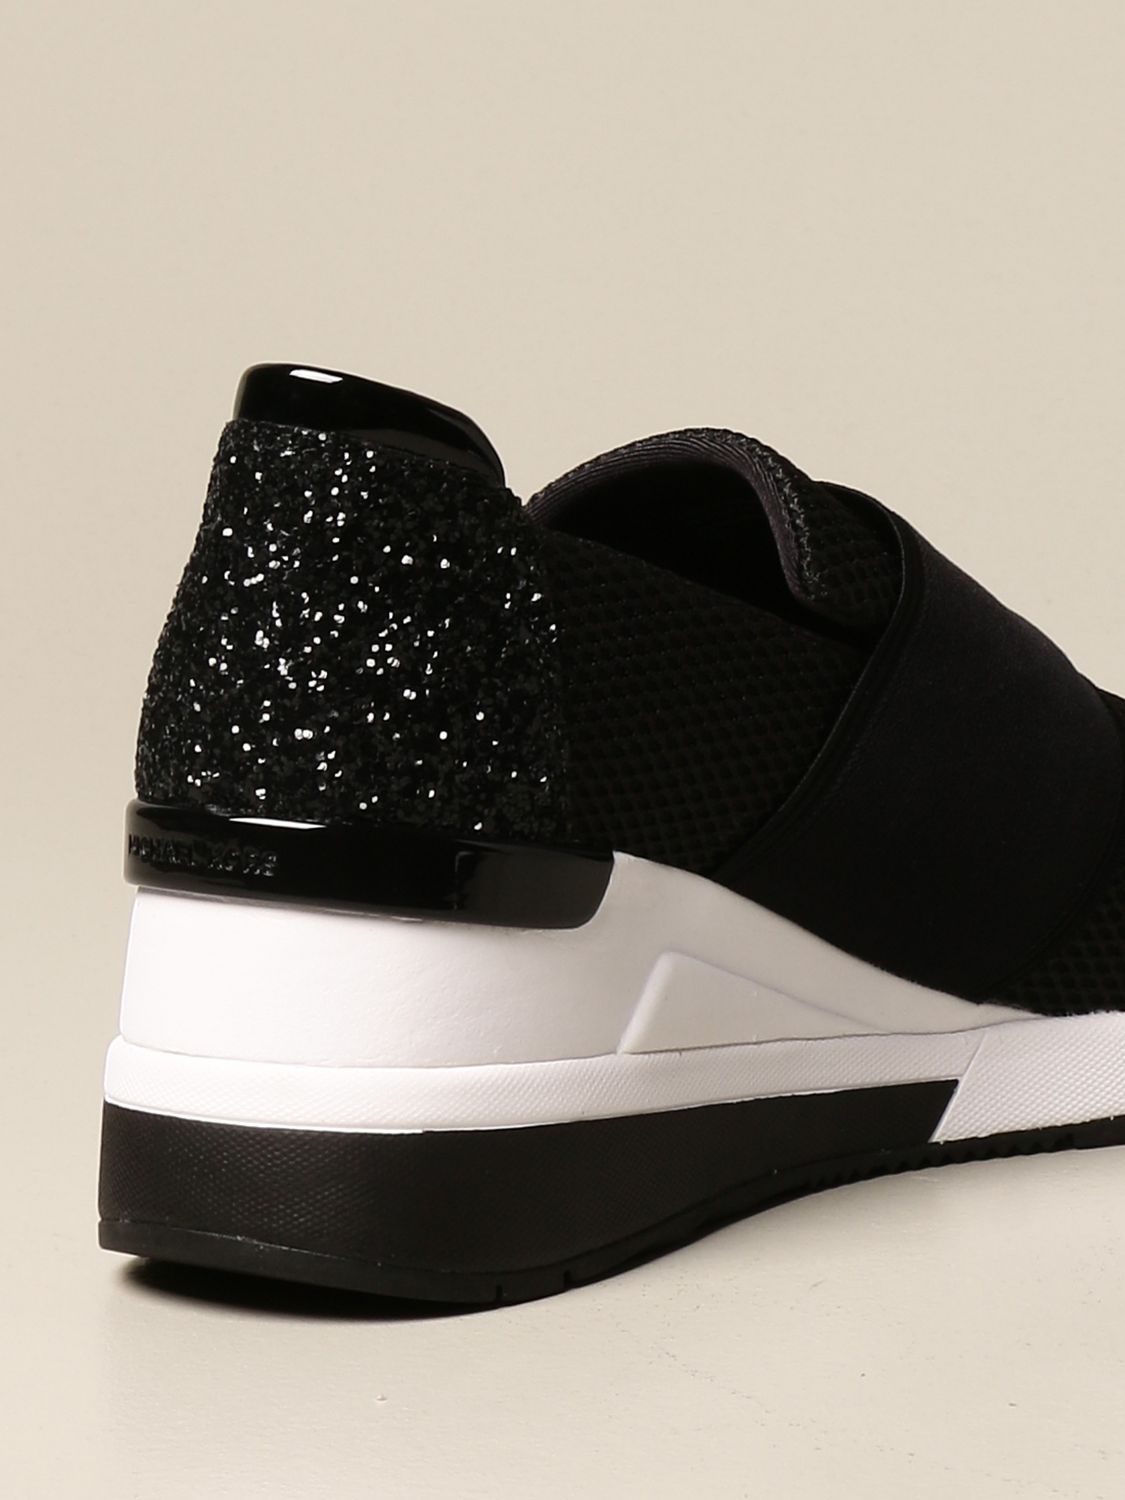 MICHAEL KORS: Michael sneakers in mesh and glitter - Black | Michael Kors  sneakers 43S7FXFS1D online on 